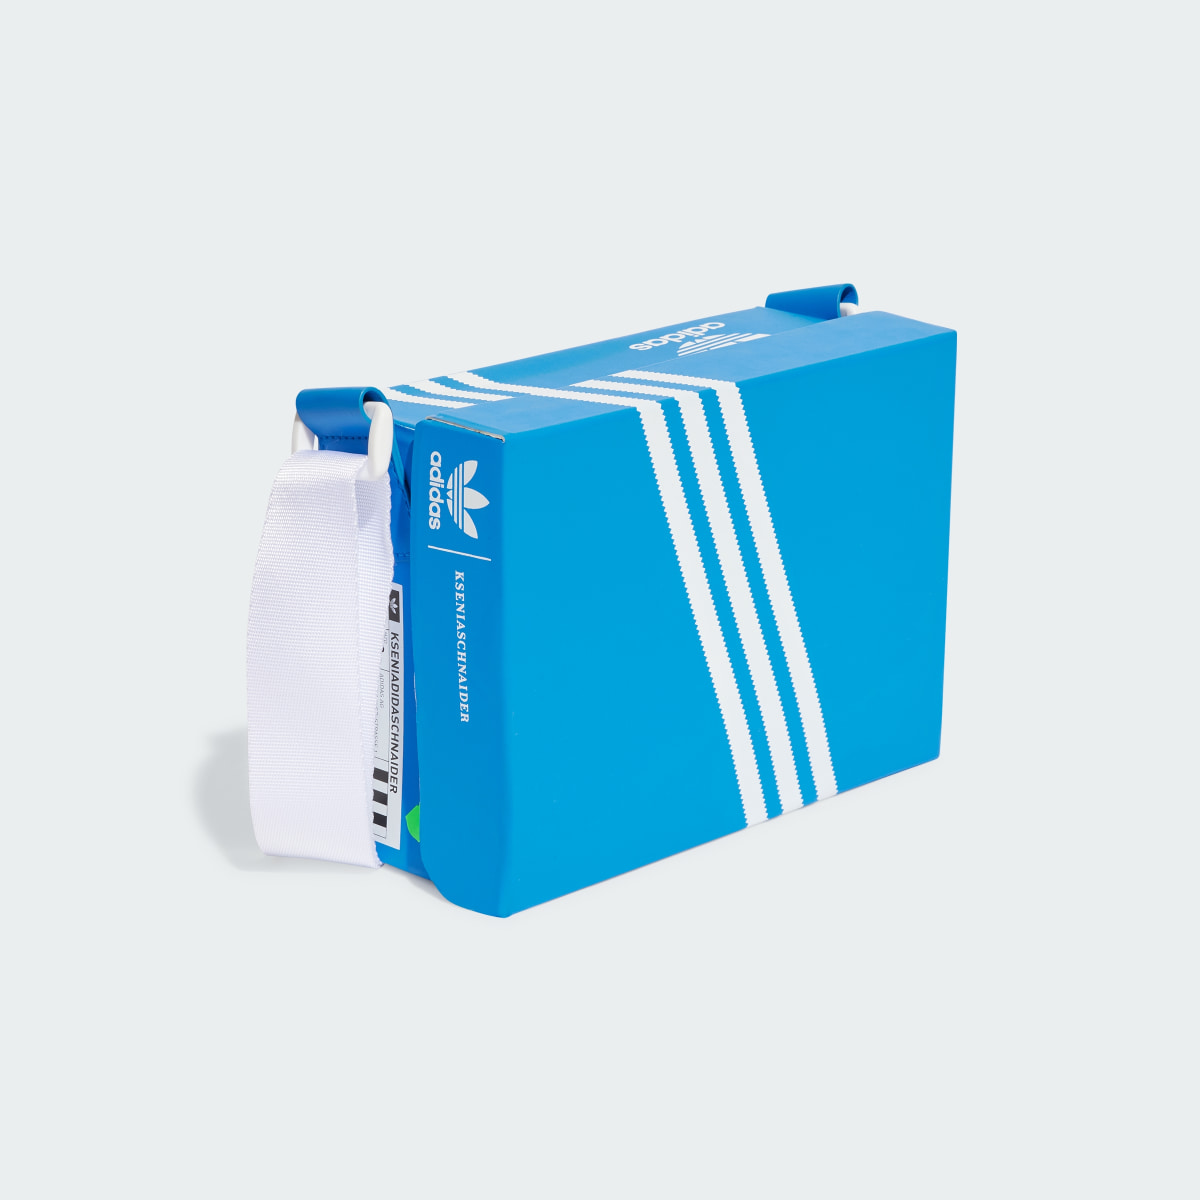 Adidas Originals x KSENIASCHNAIDER Shoebox Bag. 4